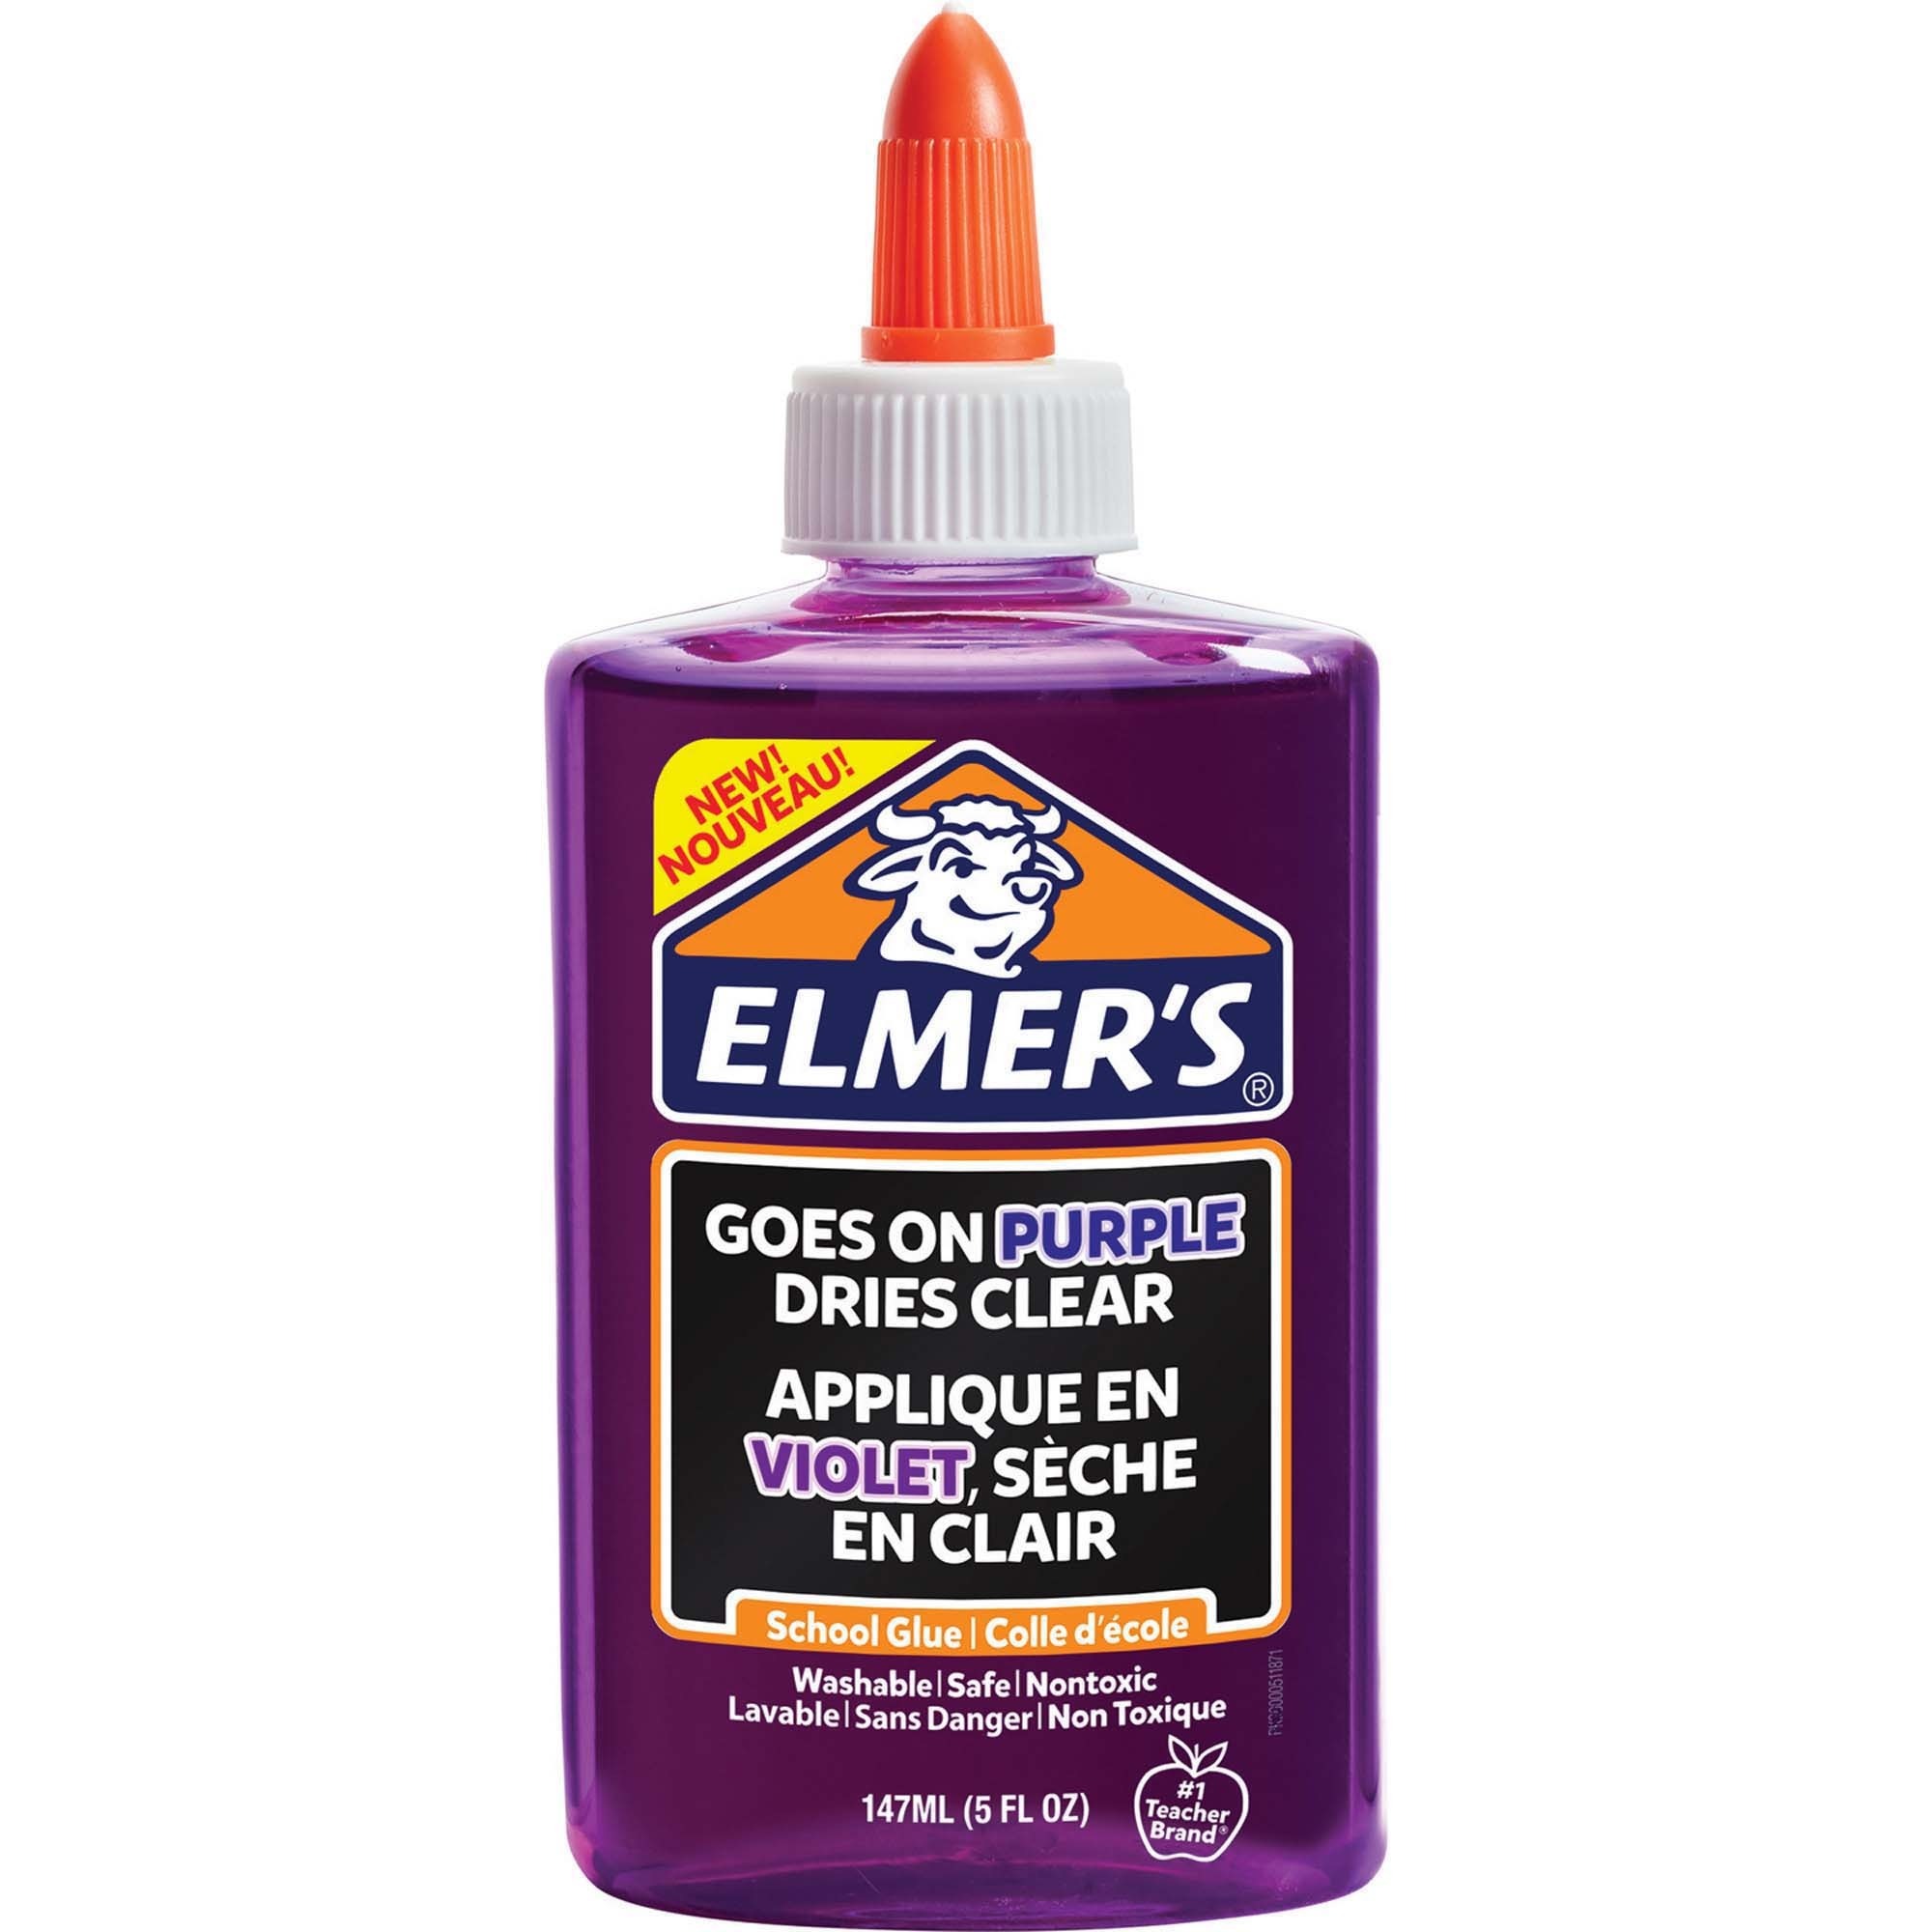 Why I Only Use Elmer's Wood Glue MAX